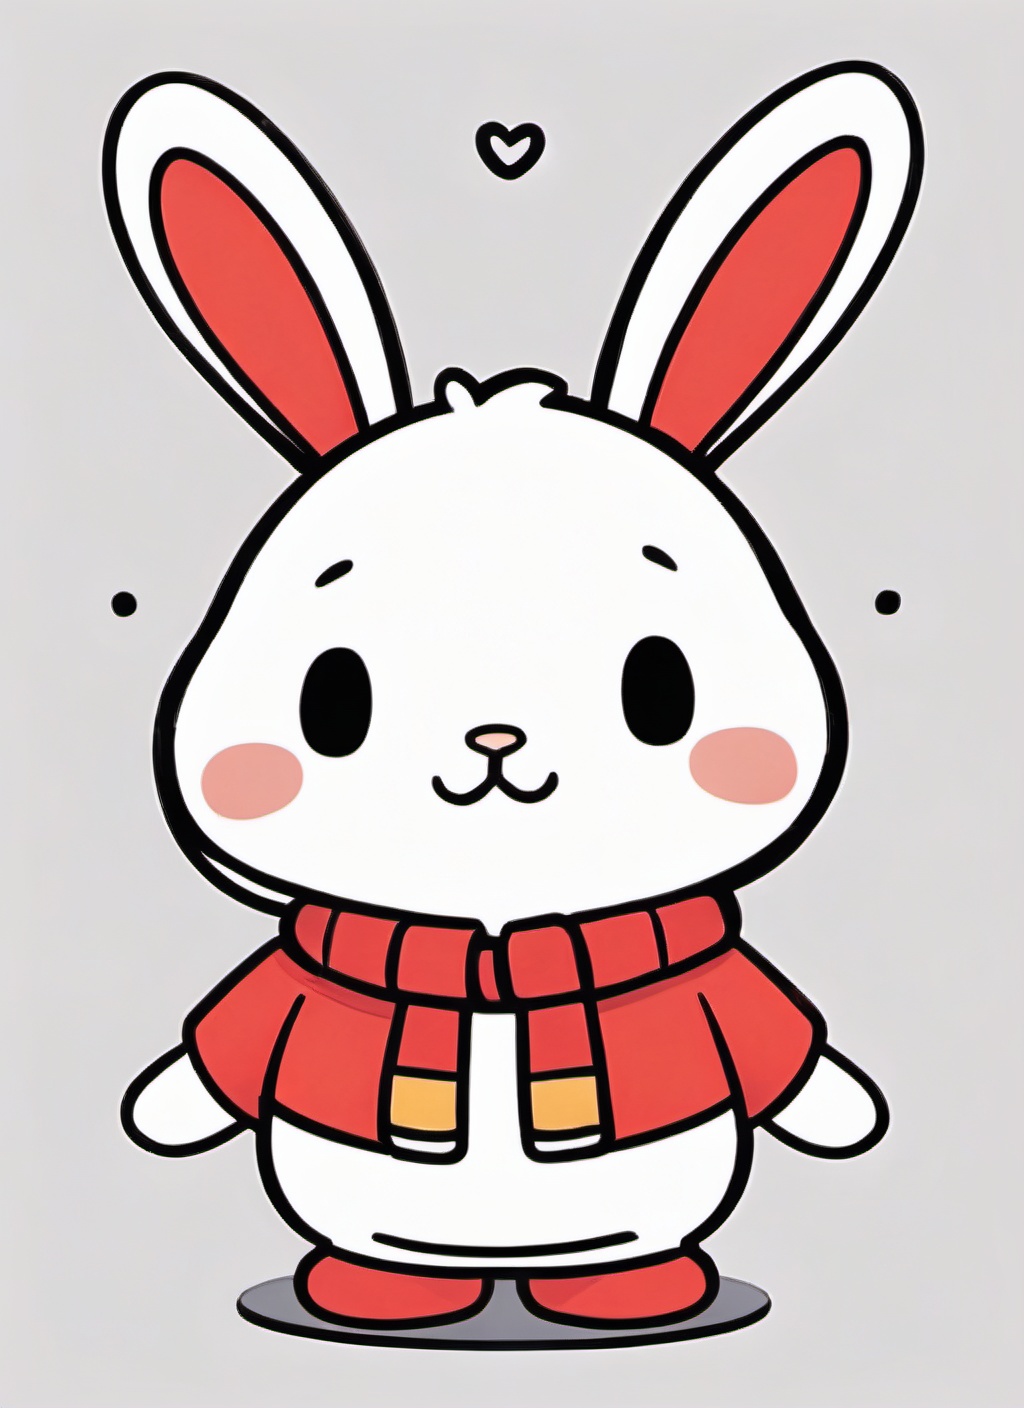  Very cute rabbit wearing a red muffler, minimalist line art, sanrio style, Festive background, , hip-hop,,小哥哥, keji,圣诞夜行, qanime,简笔卡通人物,围巾小孩, kelala, tuyanvhai